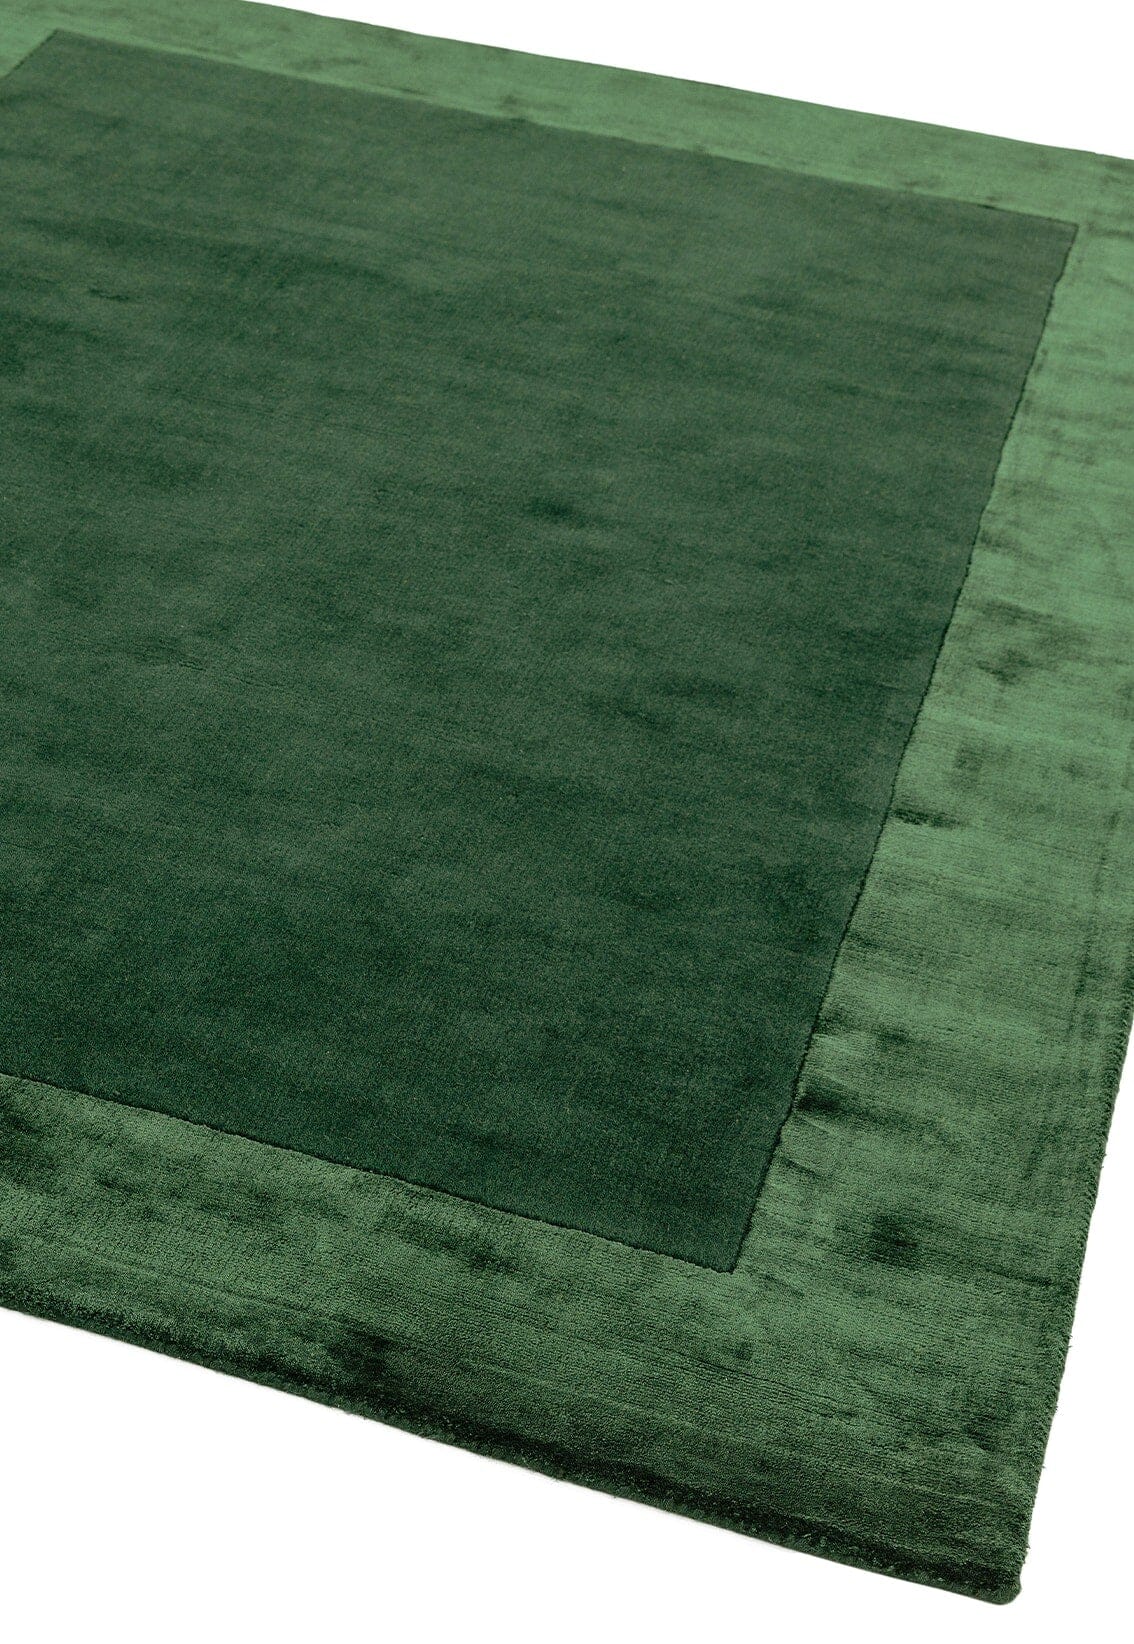  Asiatic Carpets-Asiatic Carpets Ascot Hand Woven Rug Green - 120 x 170cm-Green 469 